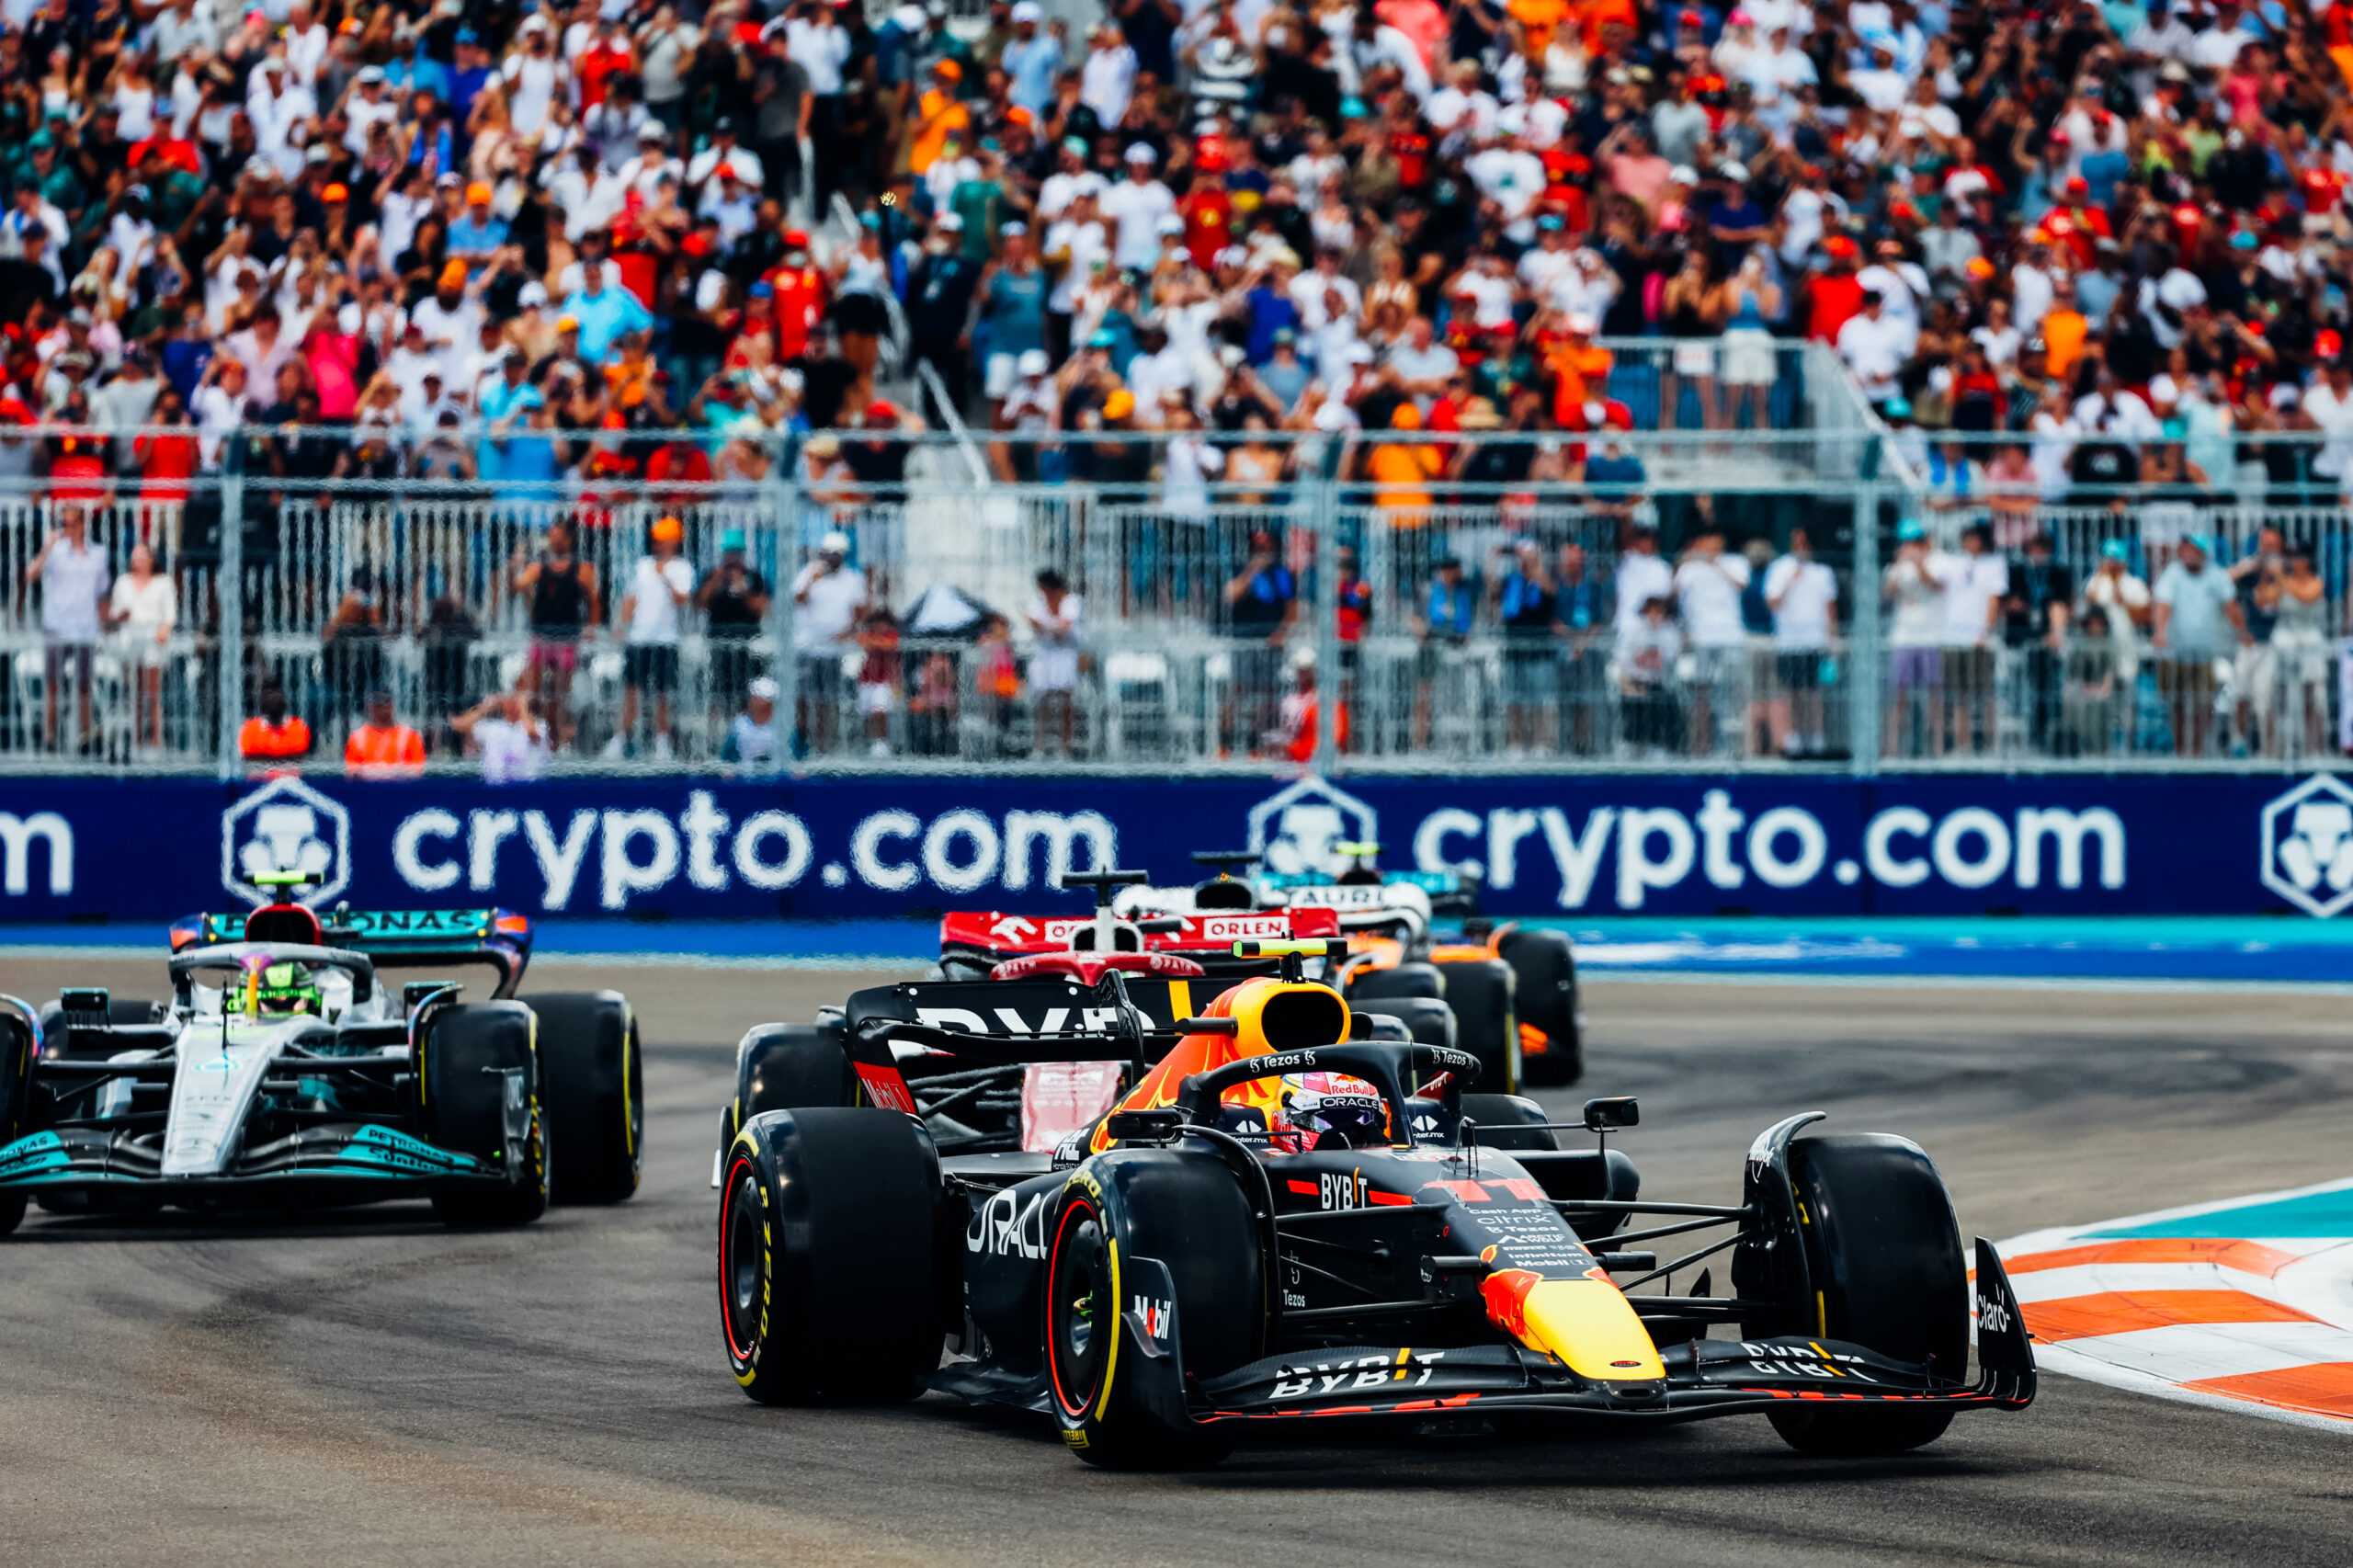 Cars racing on a Formula 1 Circuit